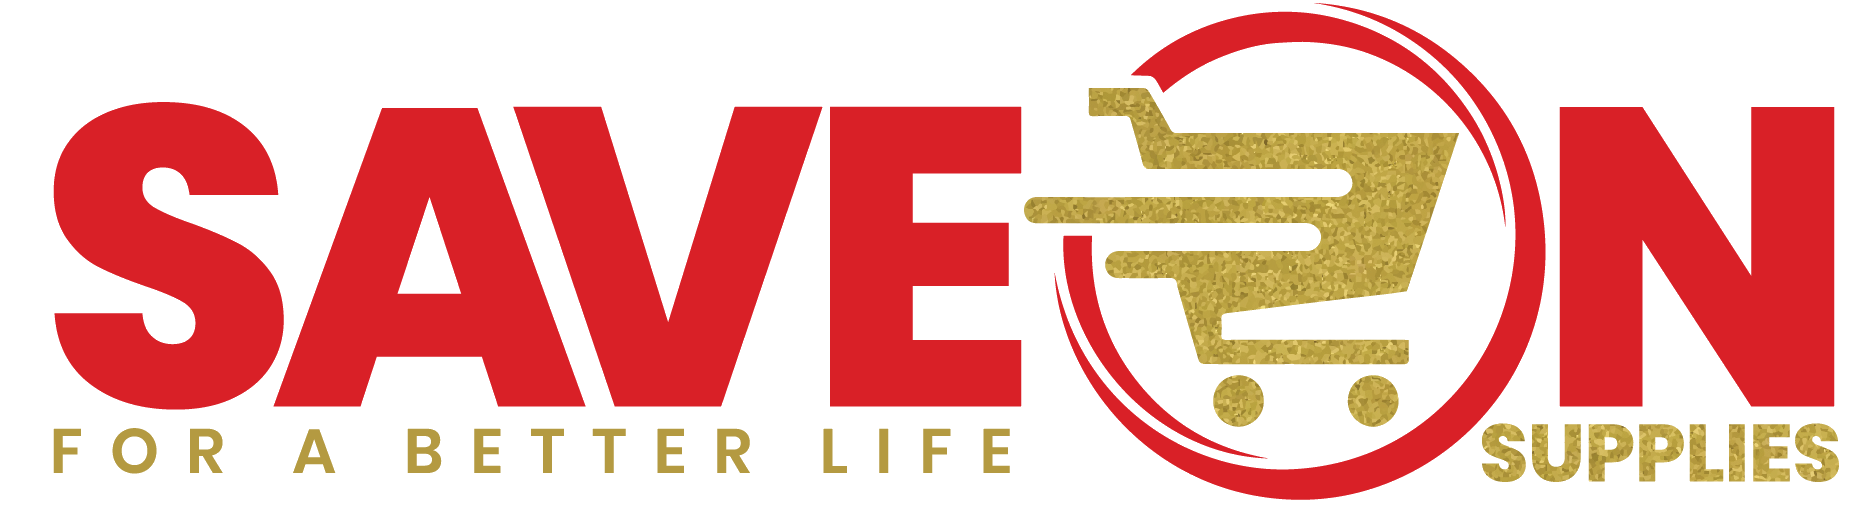 Saveon logo